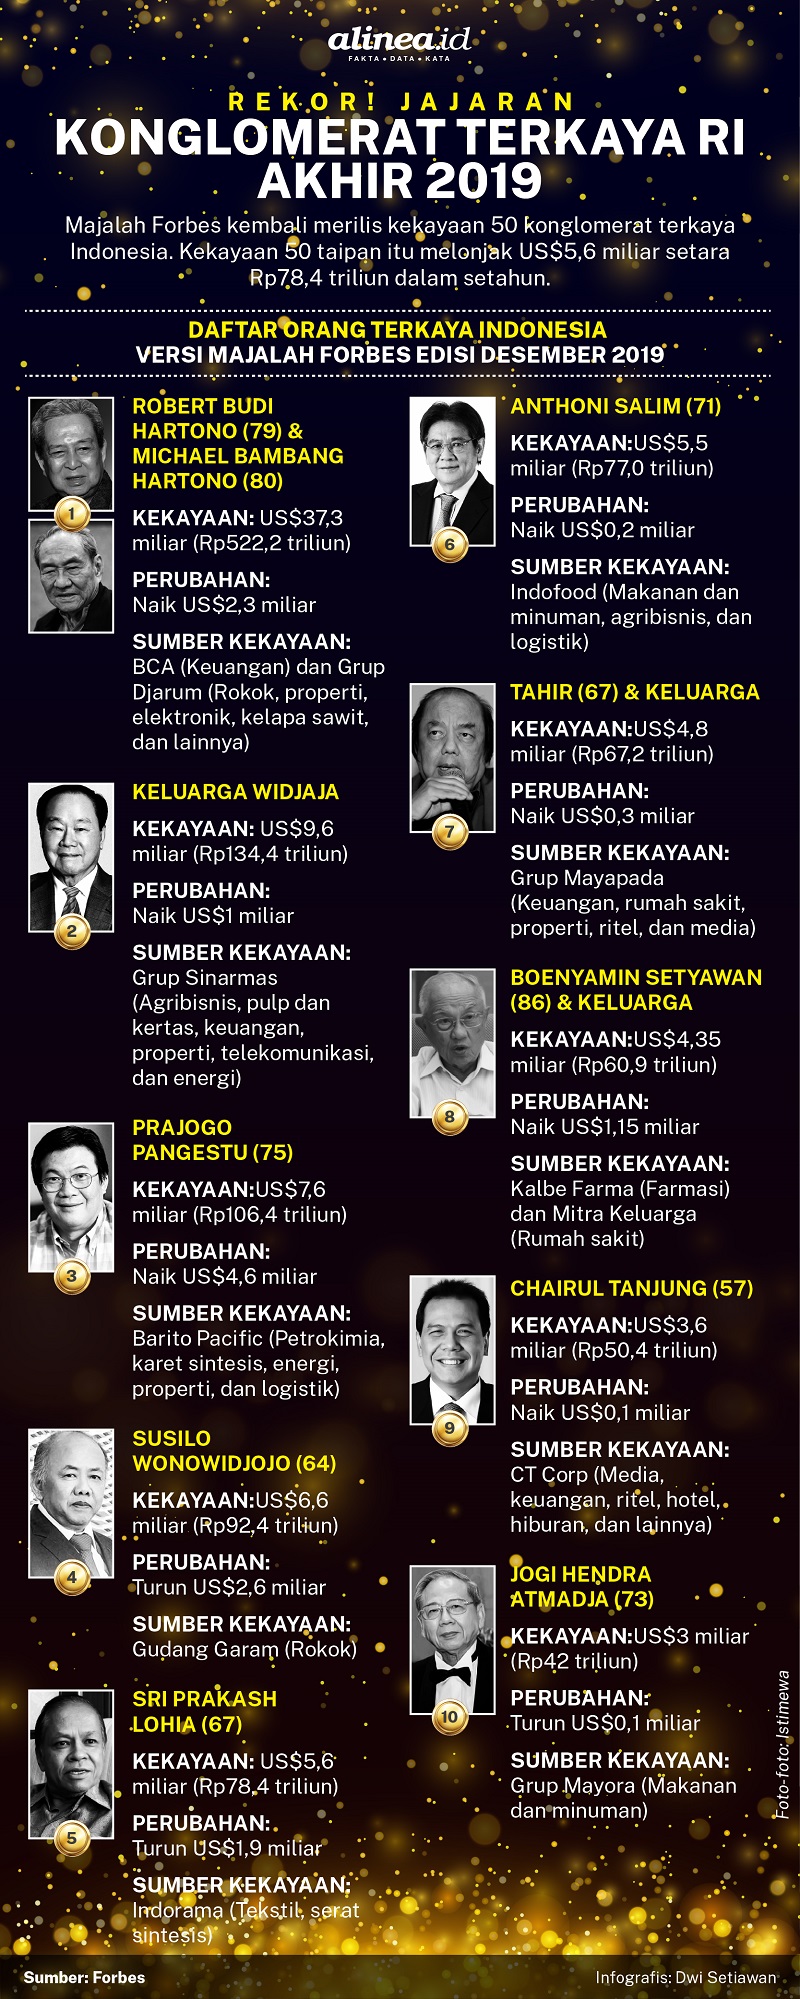 Daftar 10 konglomerat terkaya Indonesia versi majalah Forbes 2019. Alinea.id/Dwi Setiawan